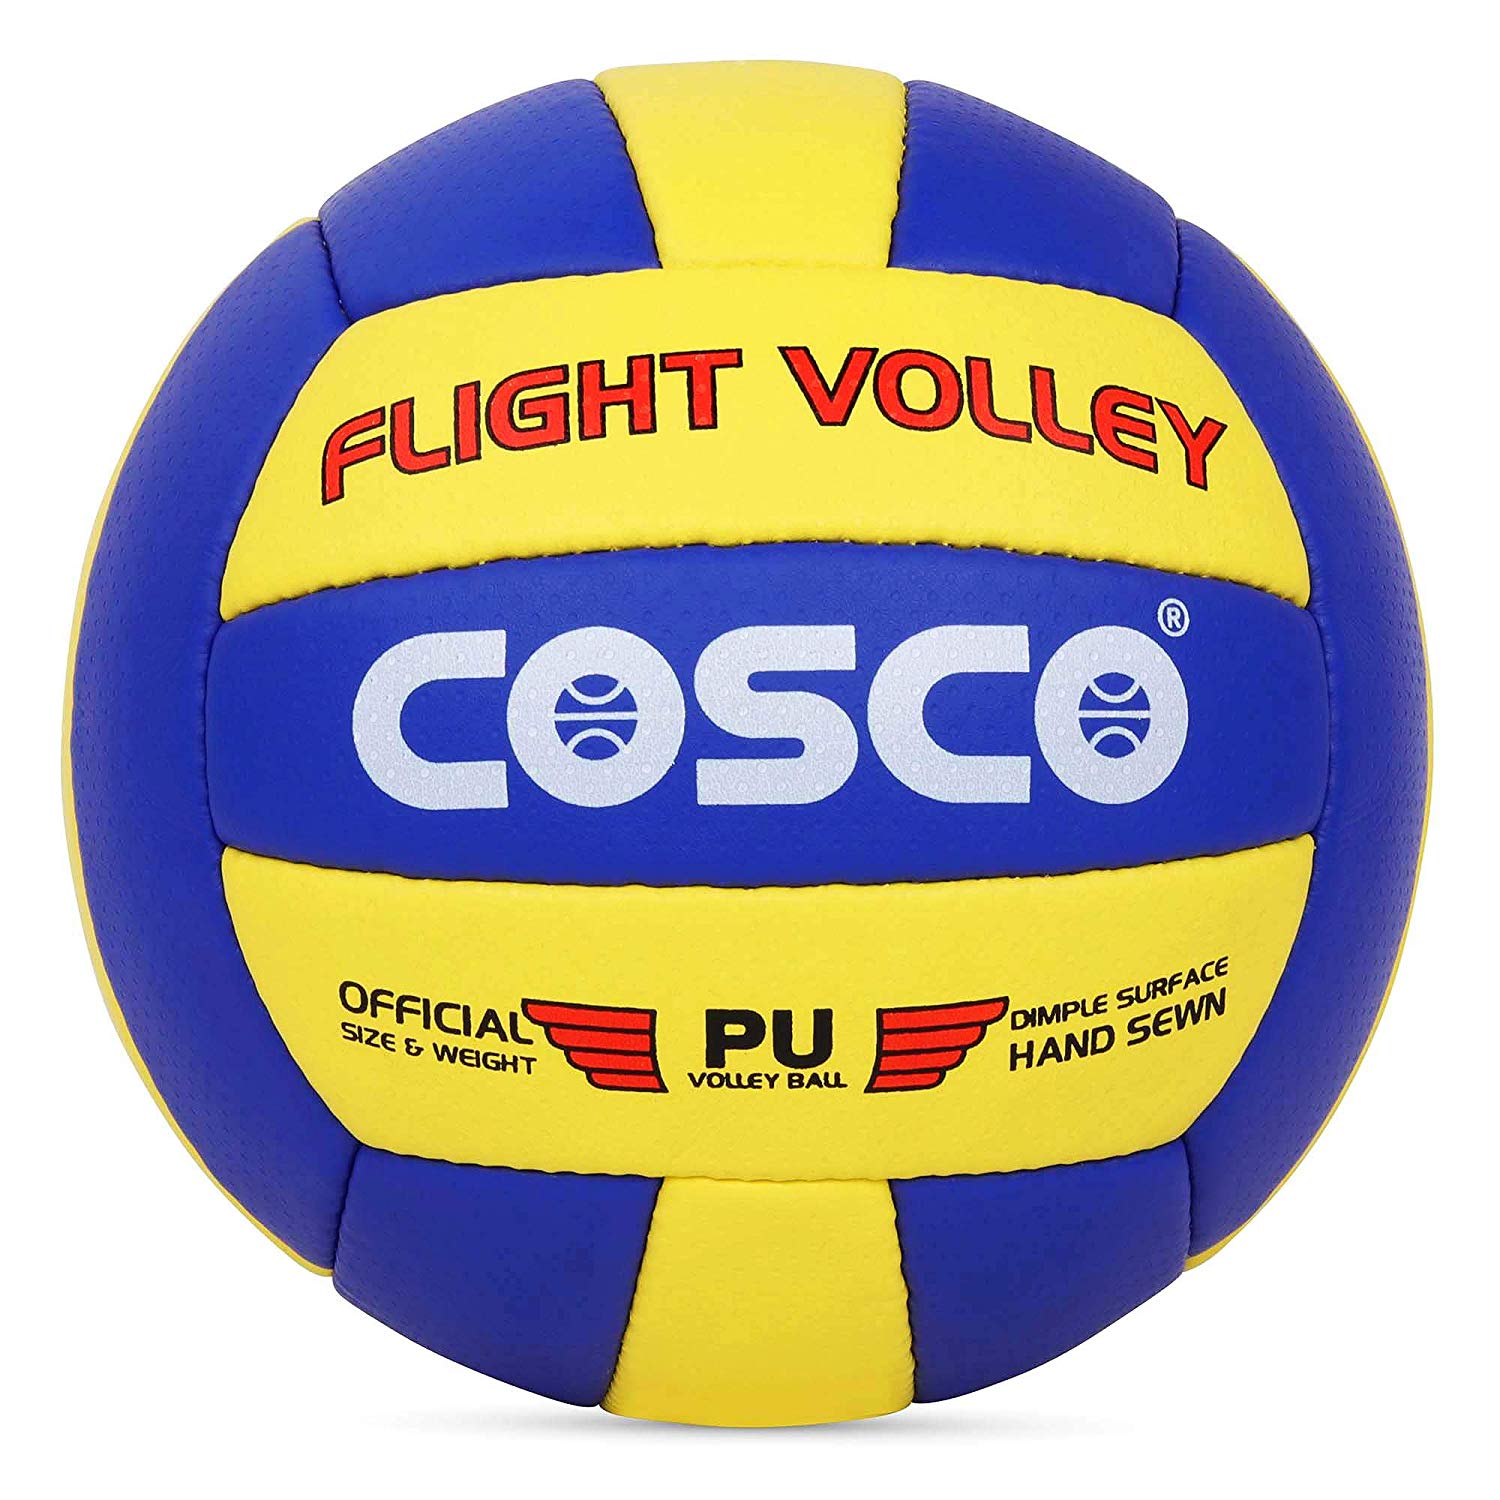 Cosco Flight Volley Ball, Size 4 - Best Price online Prokicksports.com